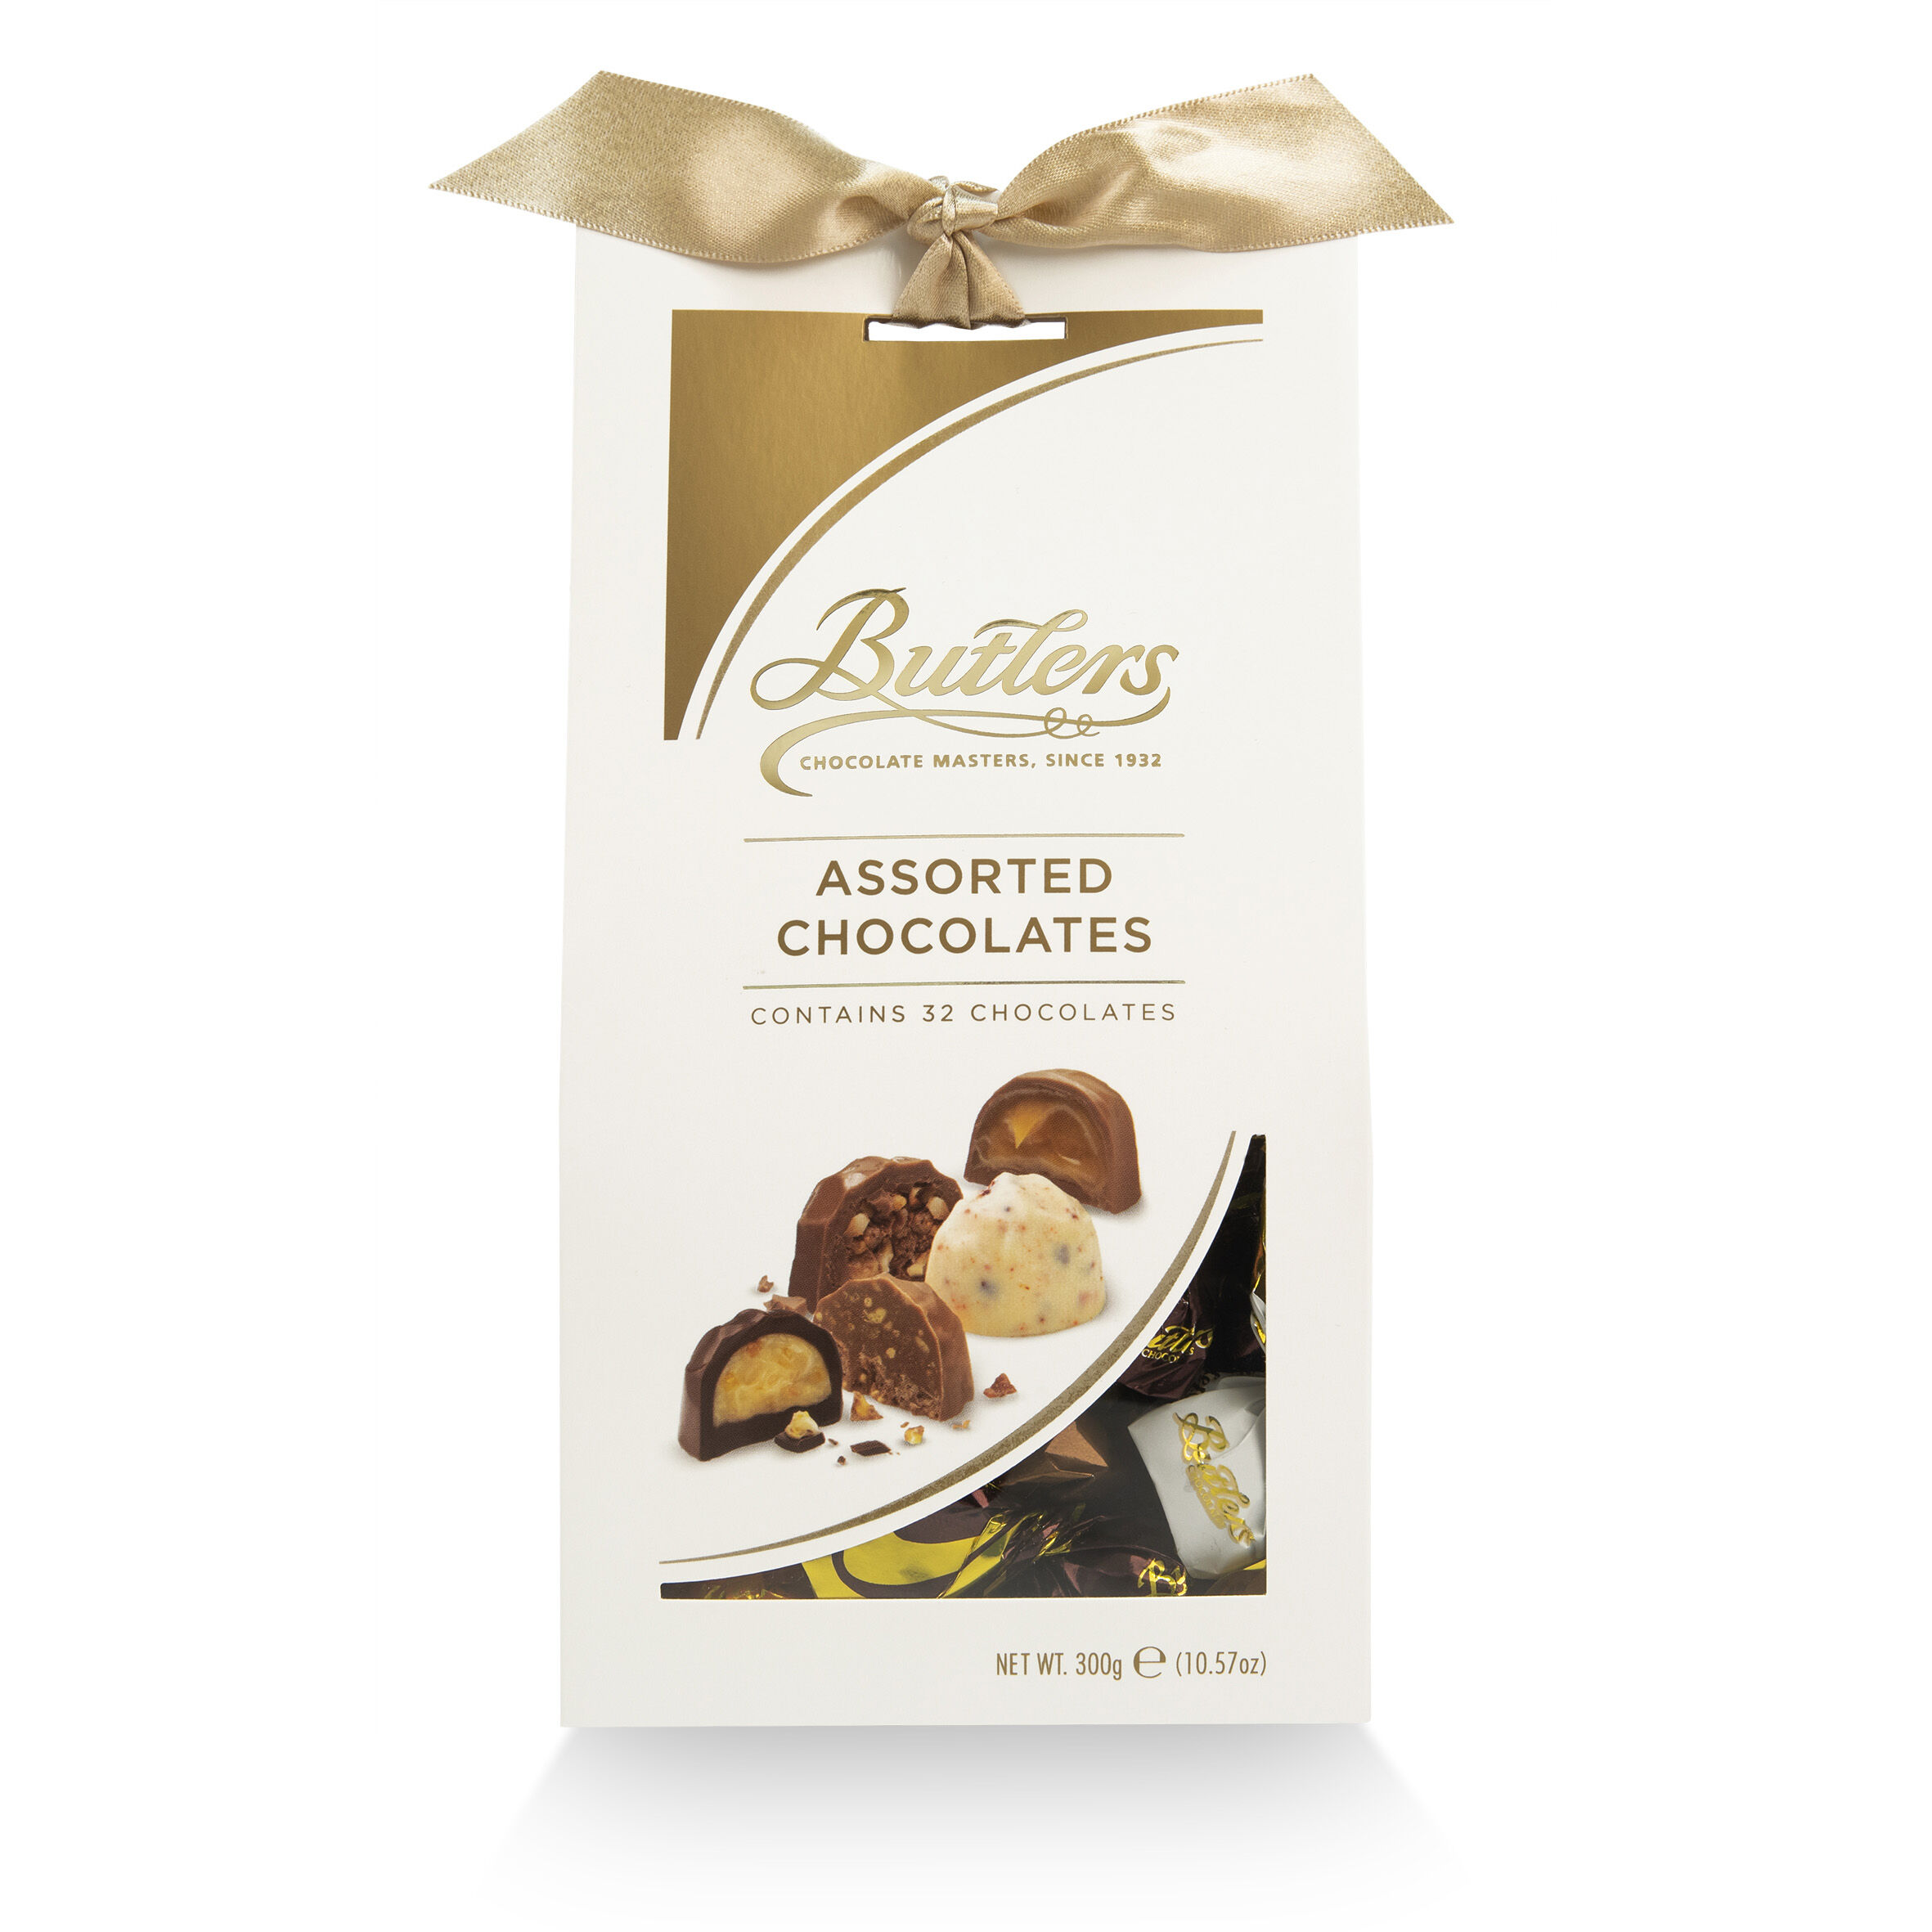 Baileys Chocolate Truffles 135g – Lir Chocolates